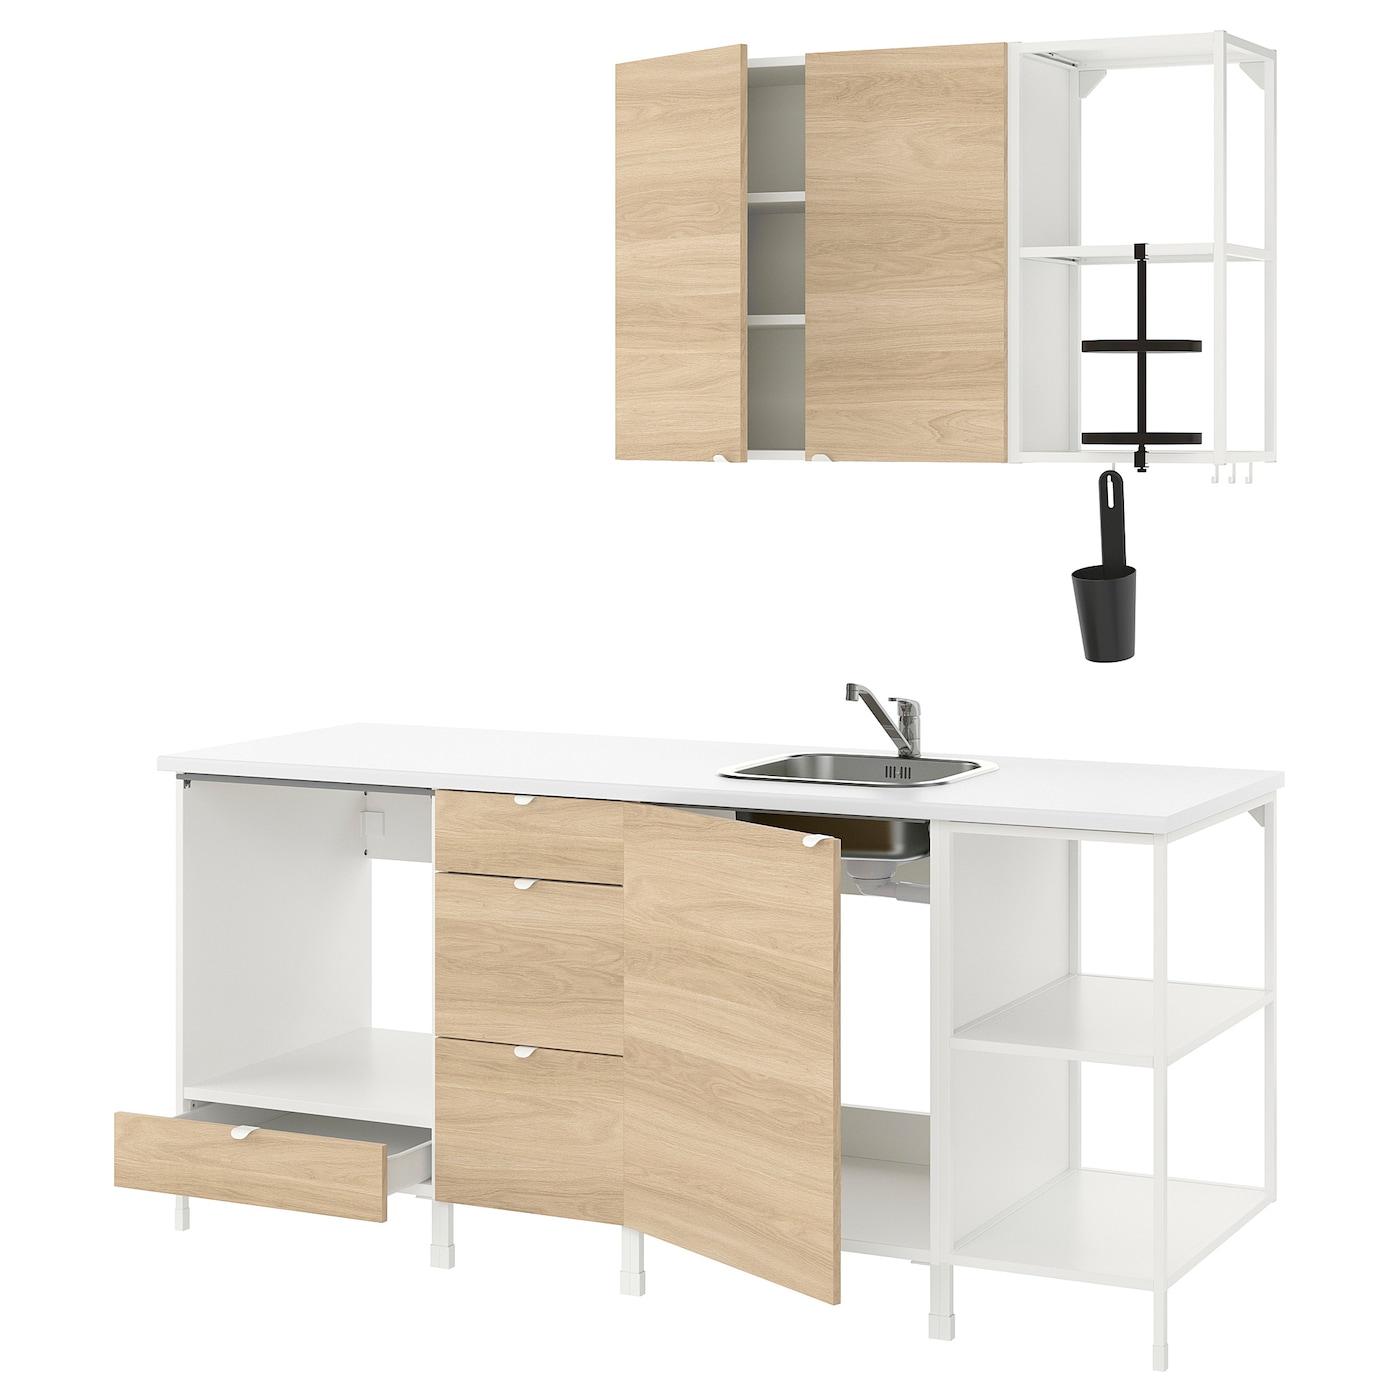 Кухня - ENHET  IKEA/ ЭНХЕТ ИКЕА, 203х222 см, белый/бежевый